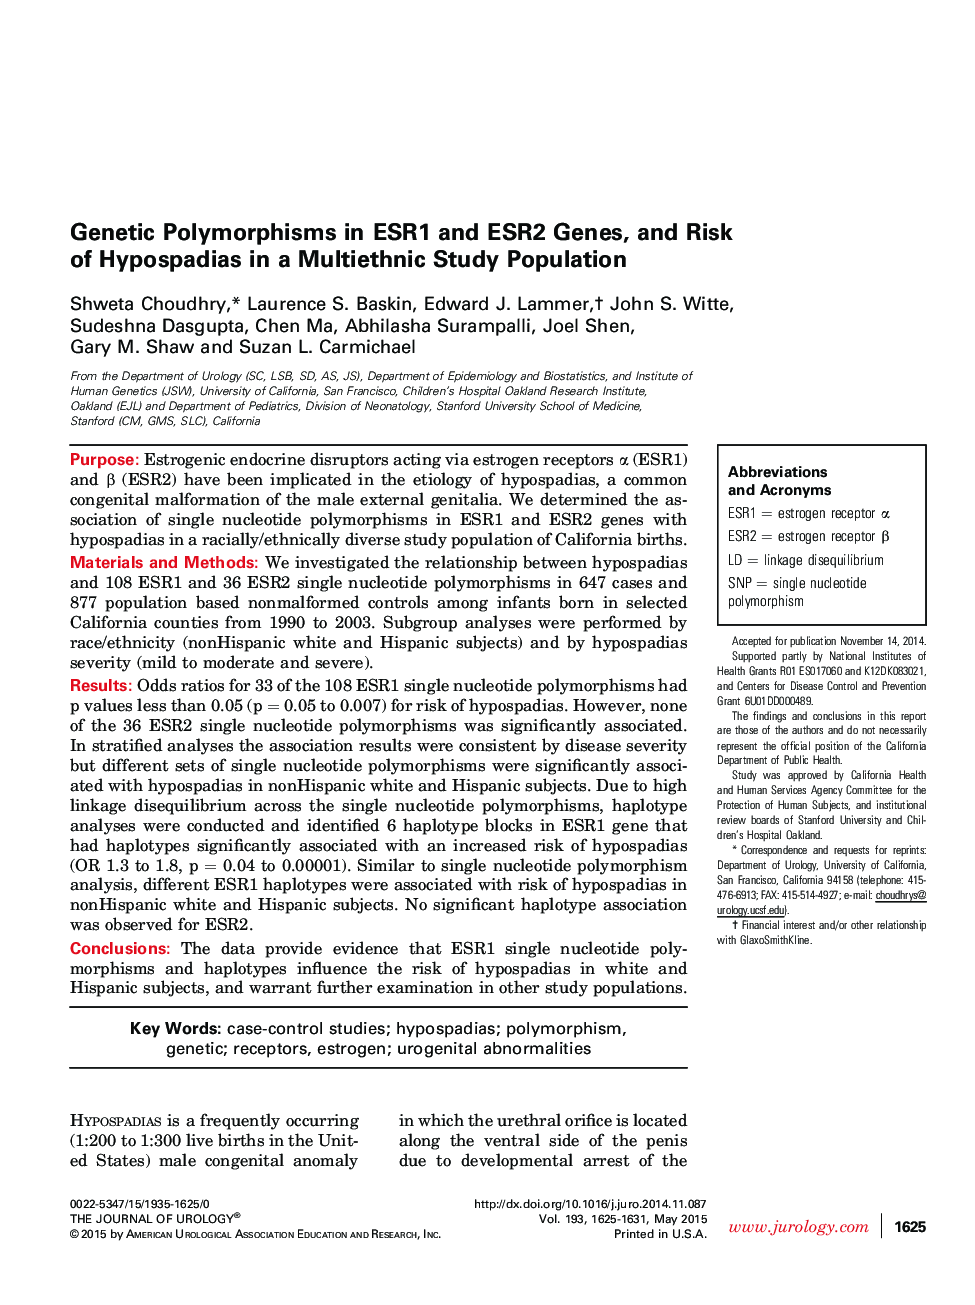 Genetic Polymorphisms in ESR1 and ESR2 Genes, and Risk of Hypospadias in a Multiethnic Study Population 